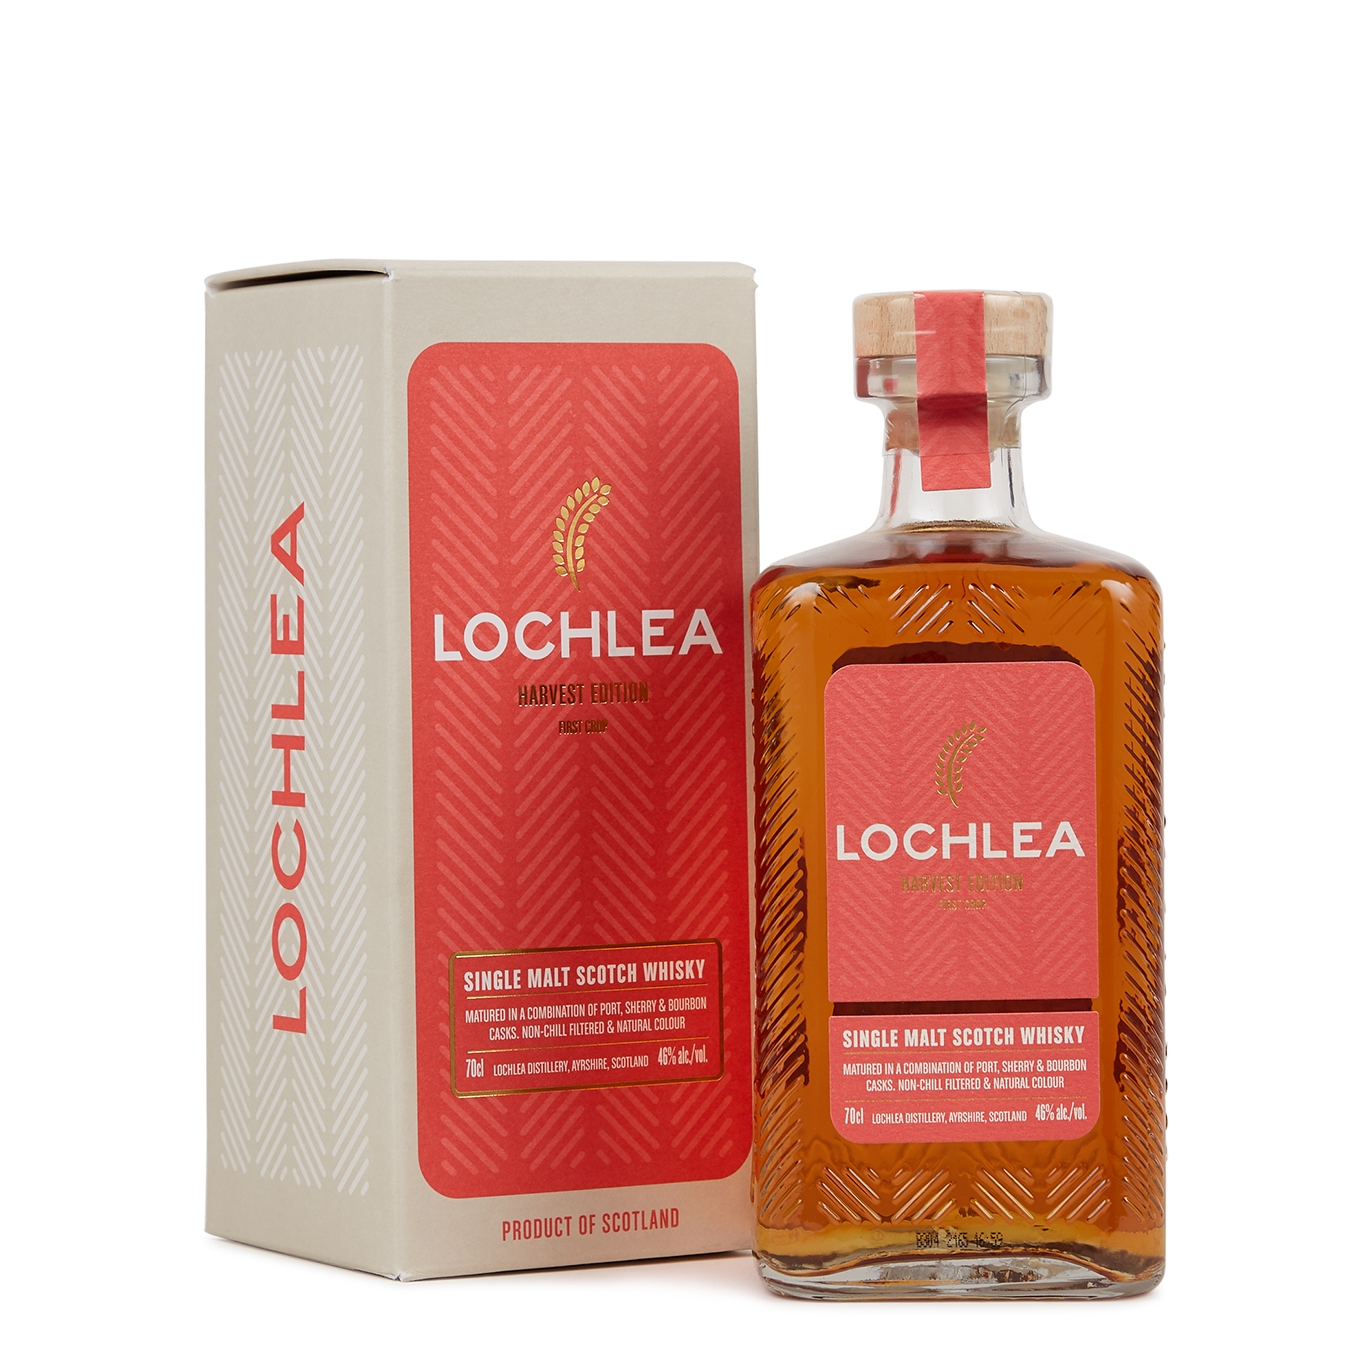 Lochlea Harvest Edition First Crop Single Malt Scotch Whisky